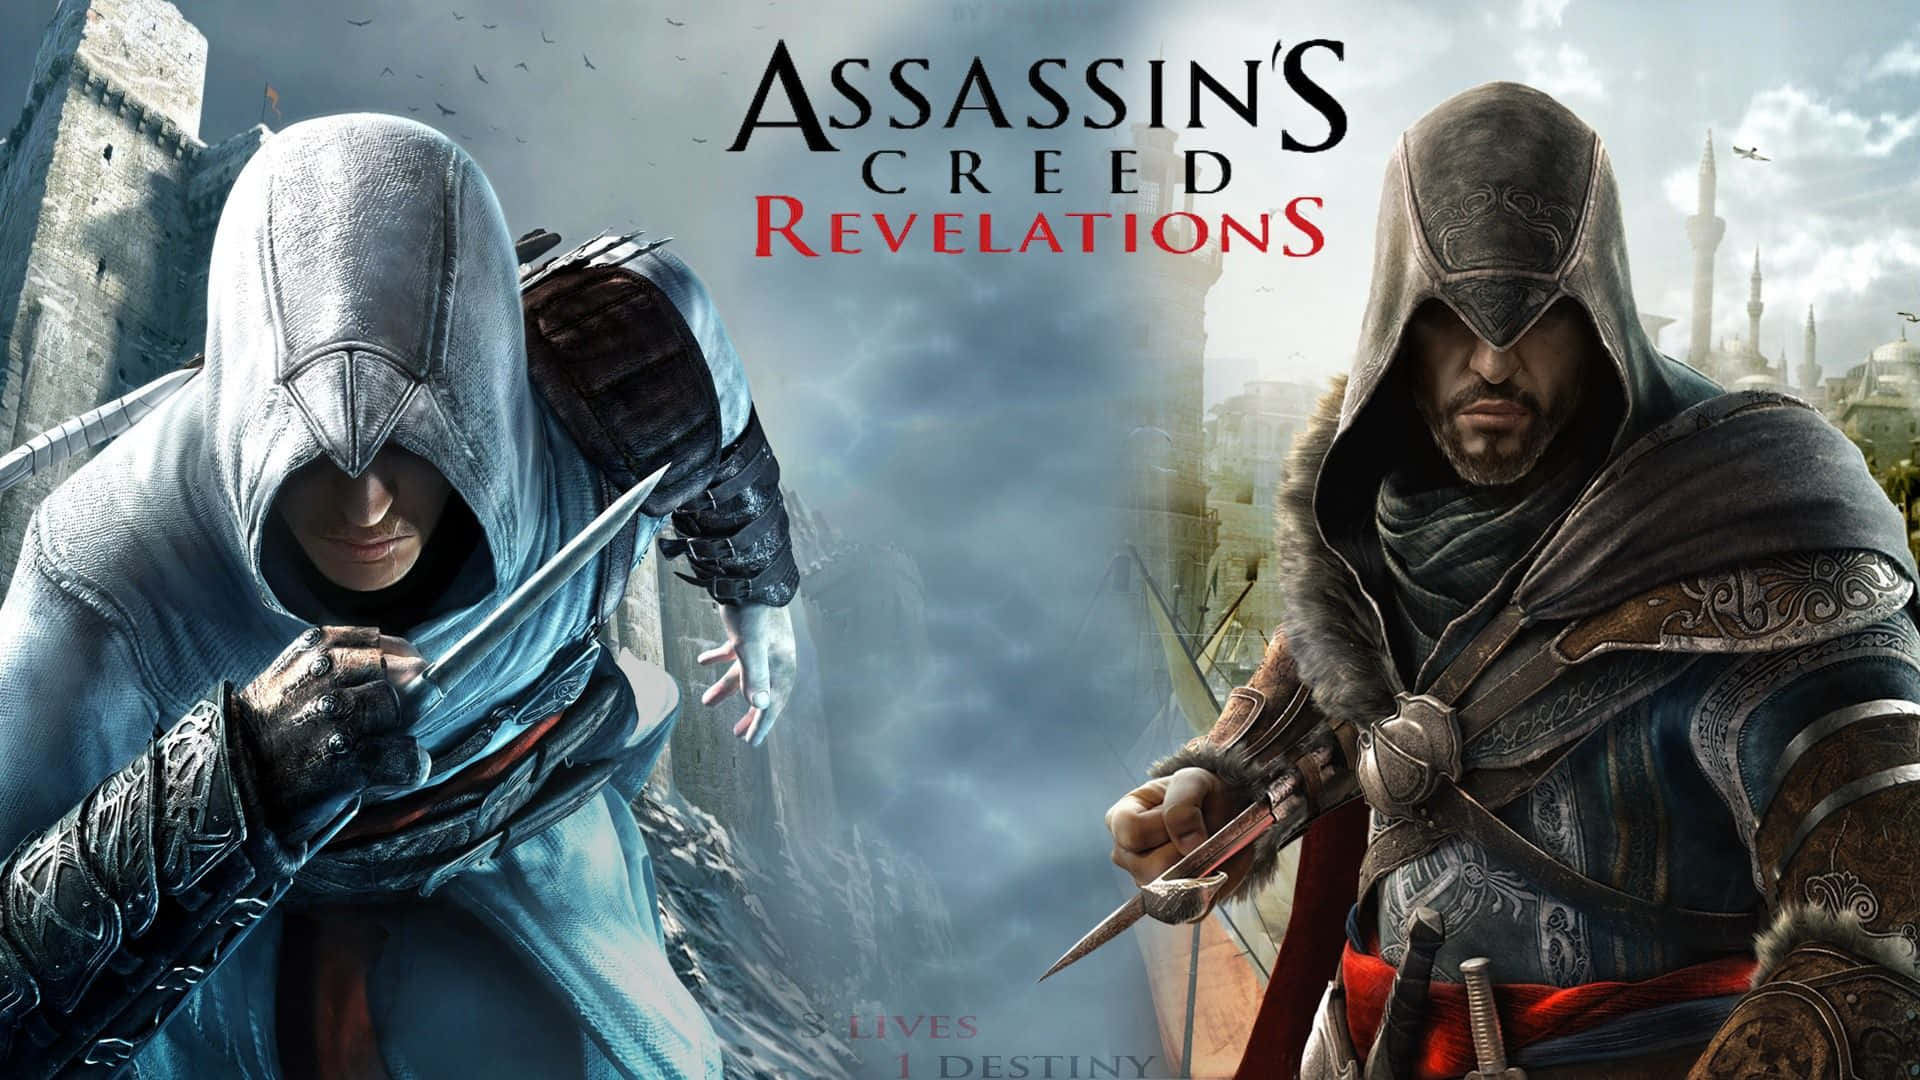 Ezio Auditore, the legendary assassin, in Assassin's Creed Revelations. Wallpaper